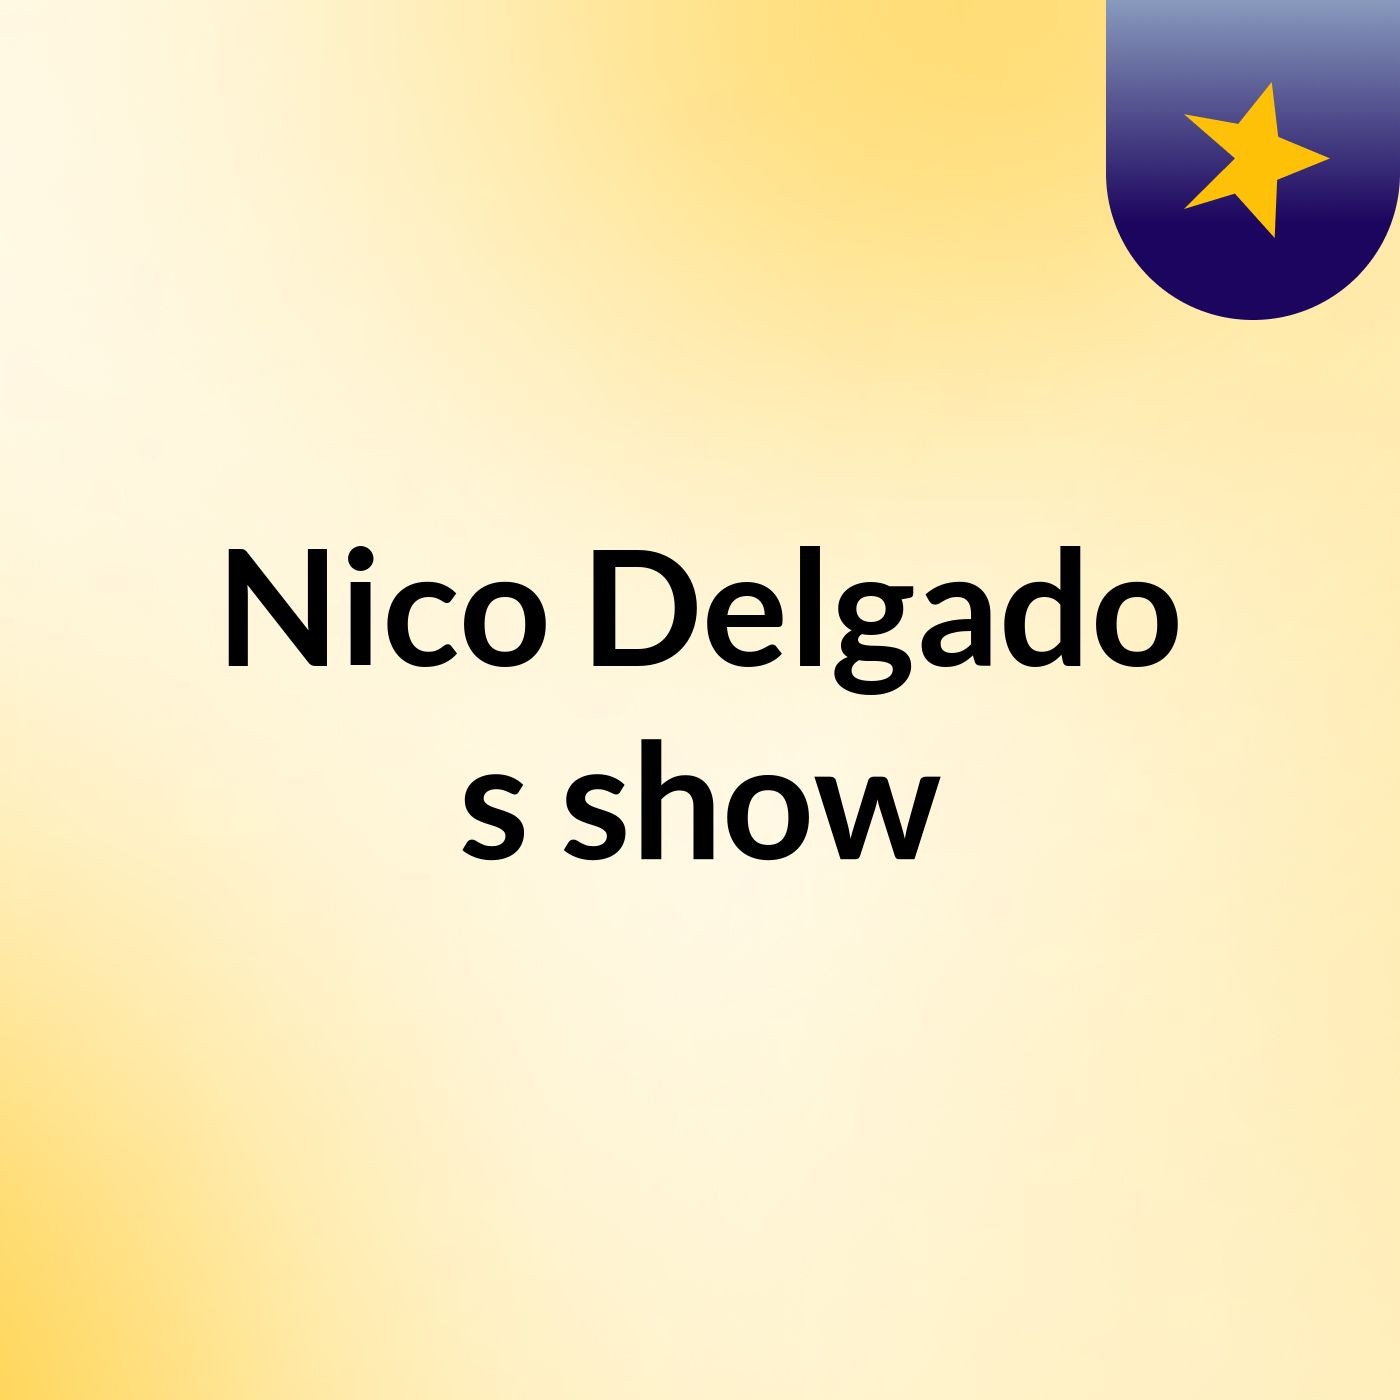 Nico Delgado's show